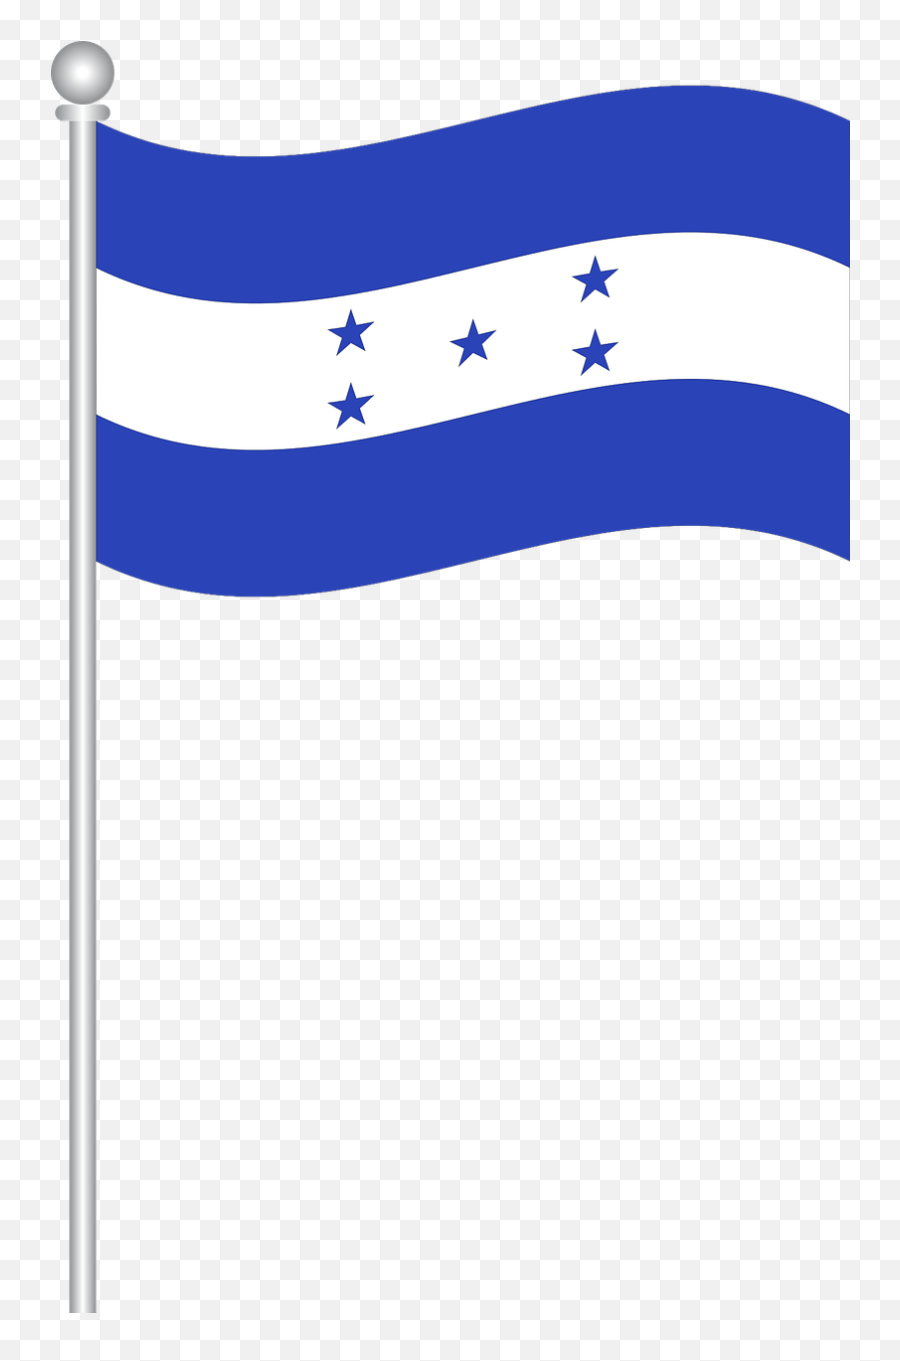 Httpswwwpicpngcomflag - Ofnewzealandflagpng52973 Emojis De Bandera De Honduras,Colombia Flag Emoji